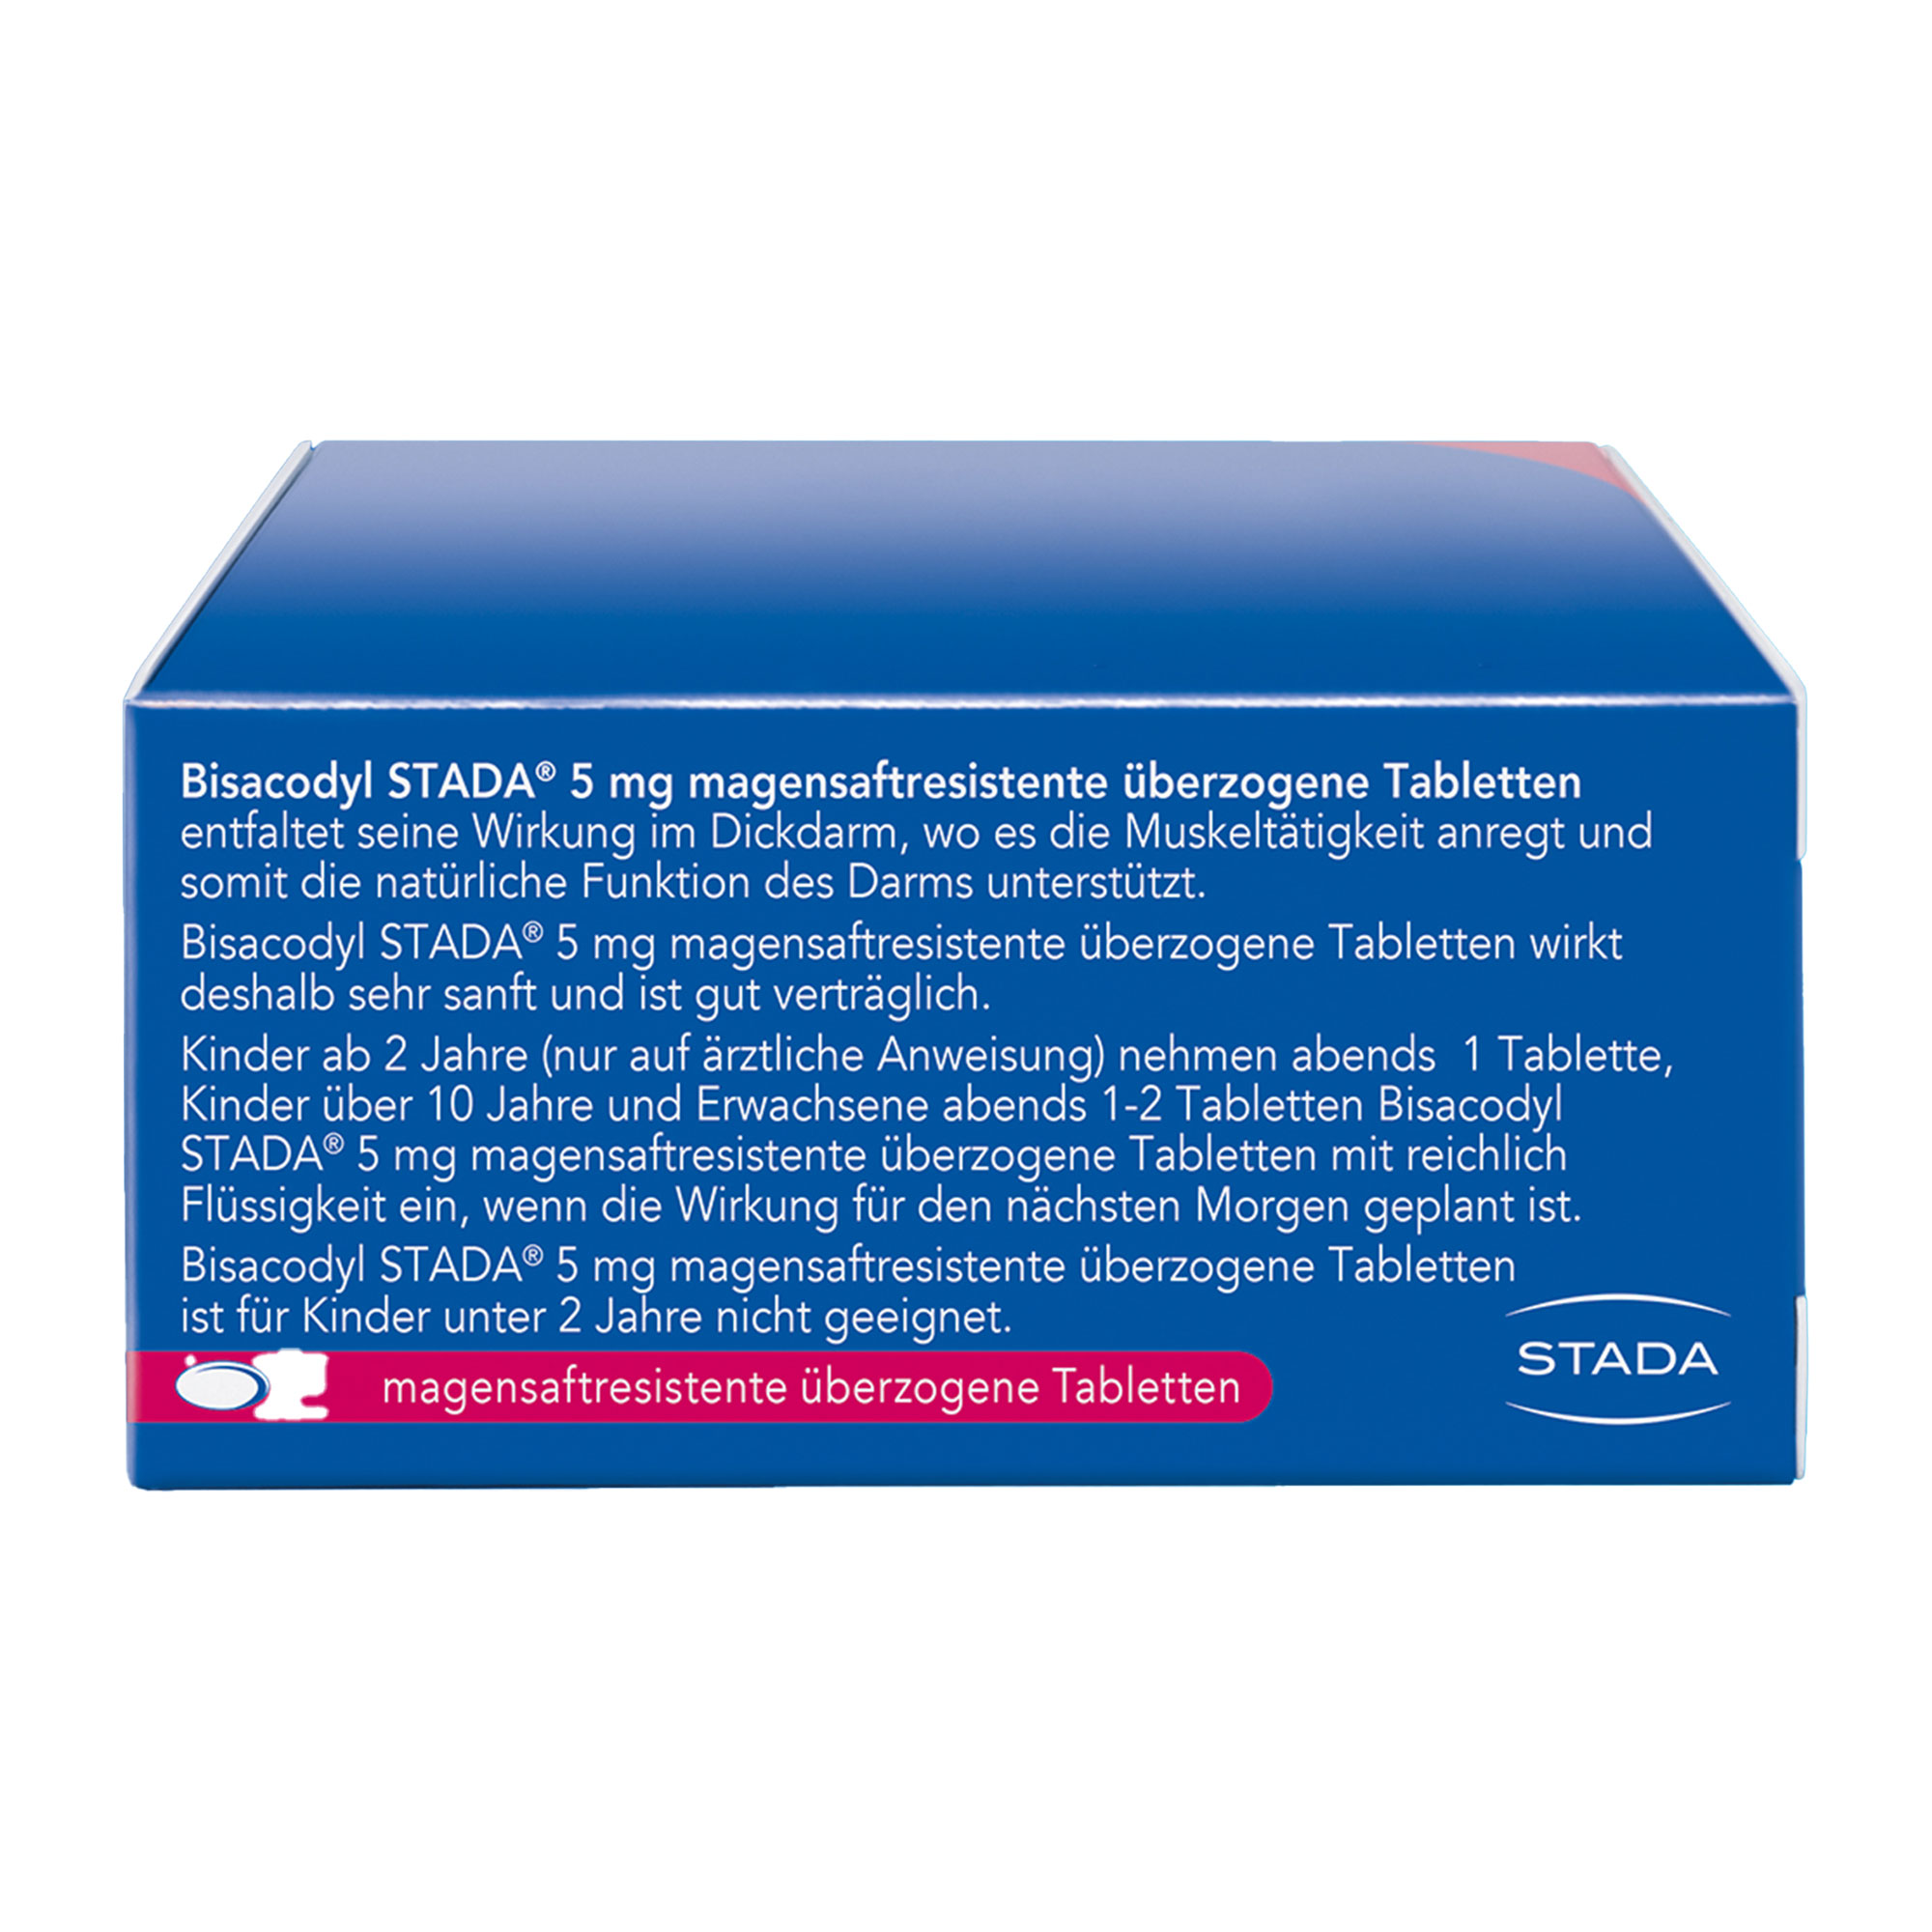 Bisacodyl STADA 5 mg magensaftresistente überzogene Tablette